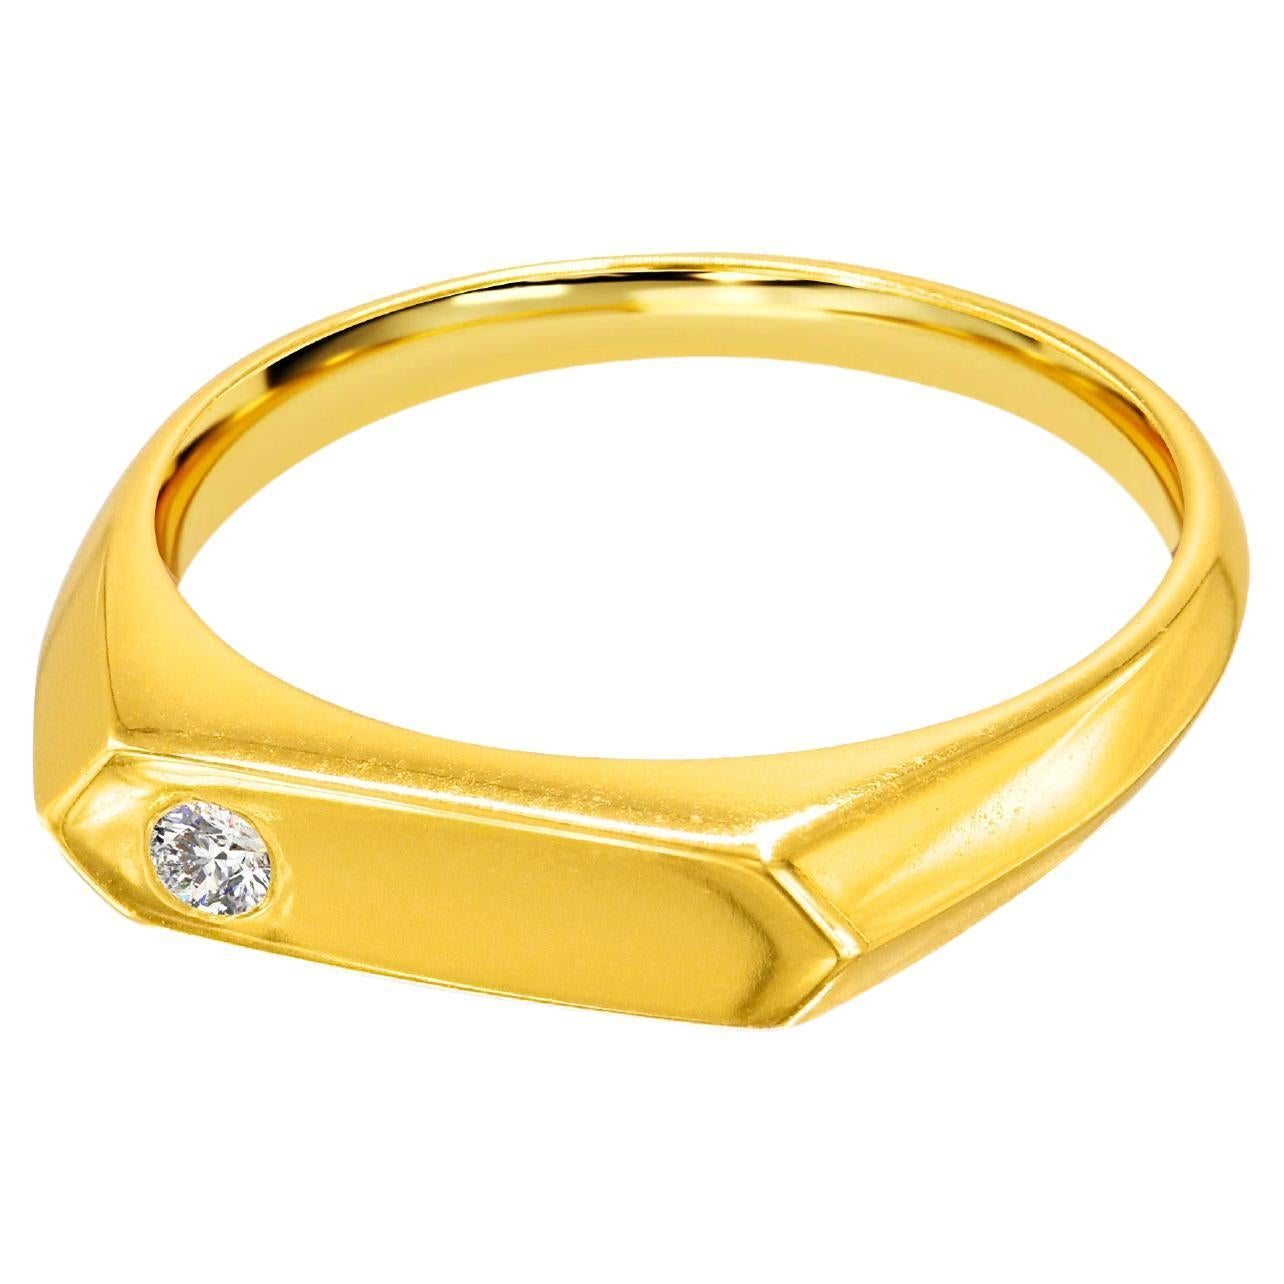 18K Gold filled Signet Bar ring with 0.04 Carat Natural Diamond